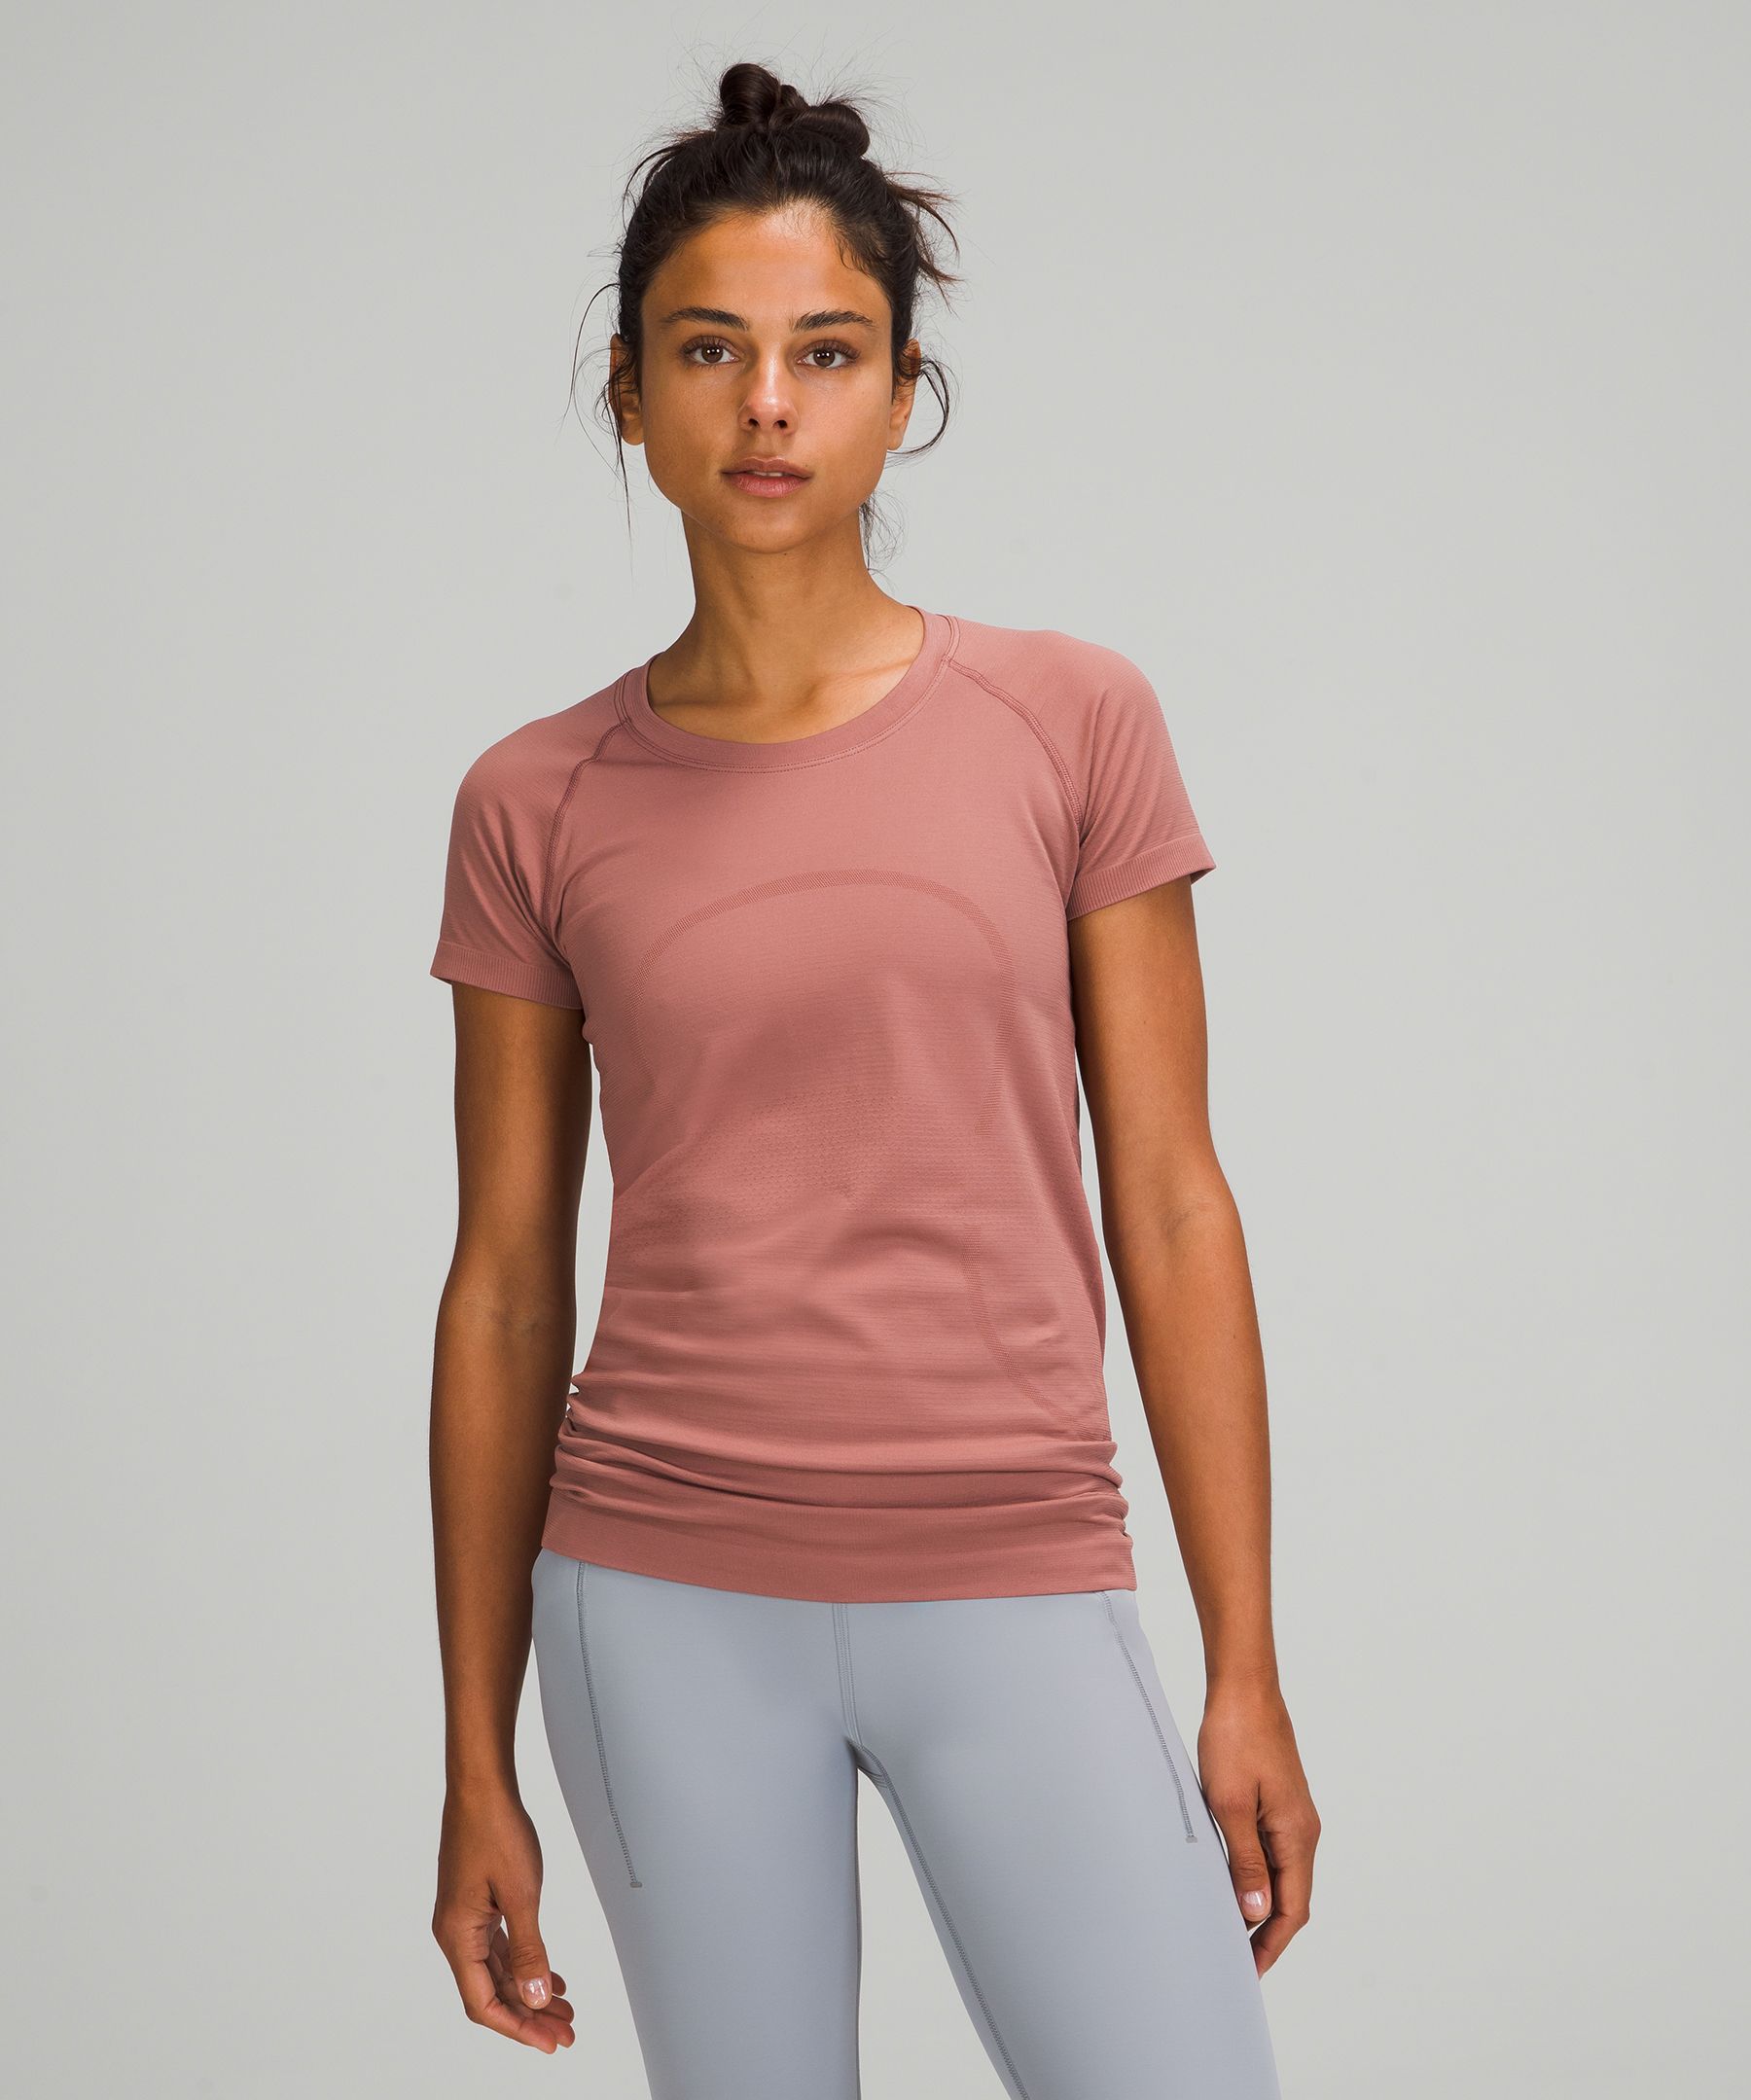 Lululemon Swiftly Tech Short Sleeve Shirt 2.0 - 132157133